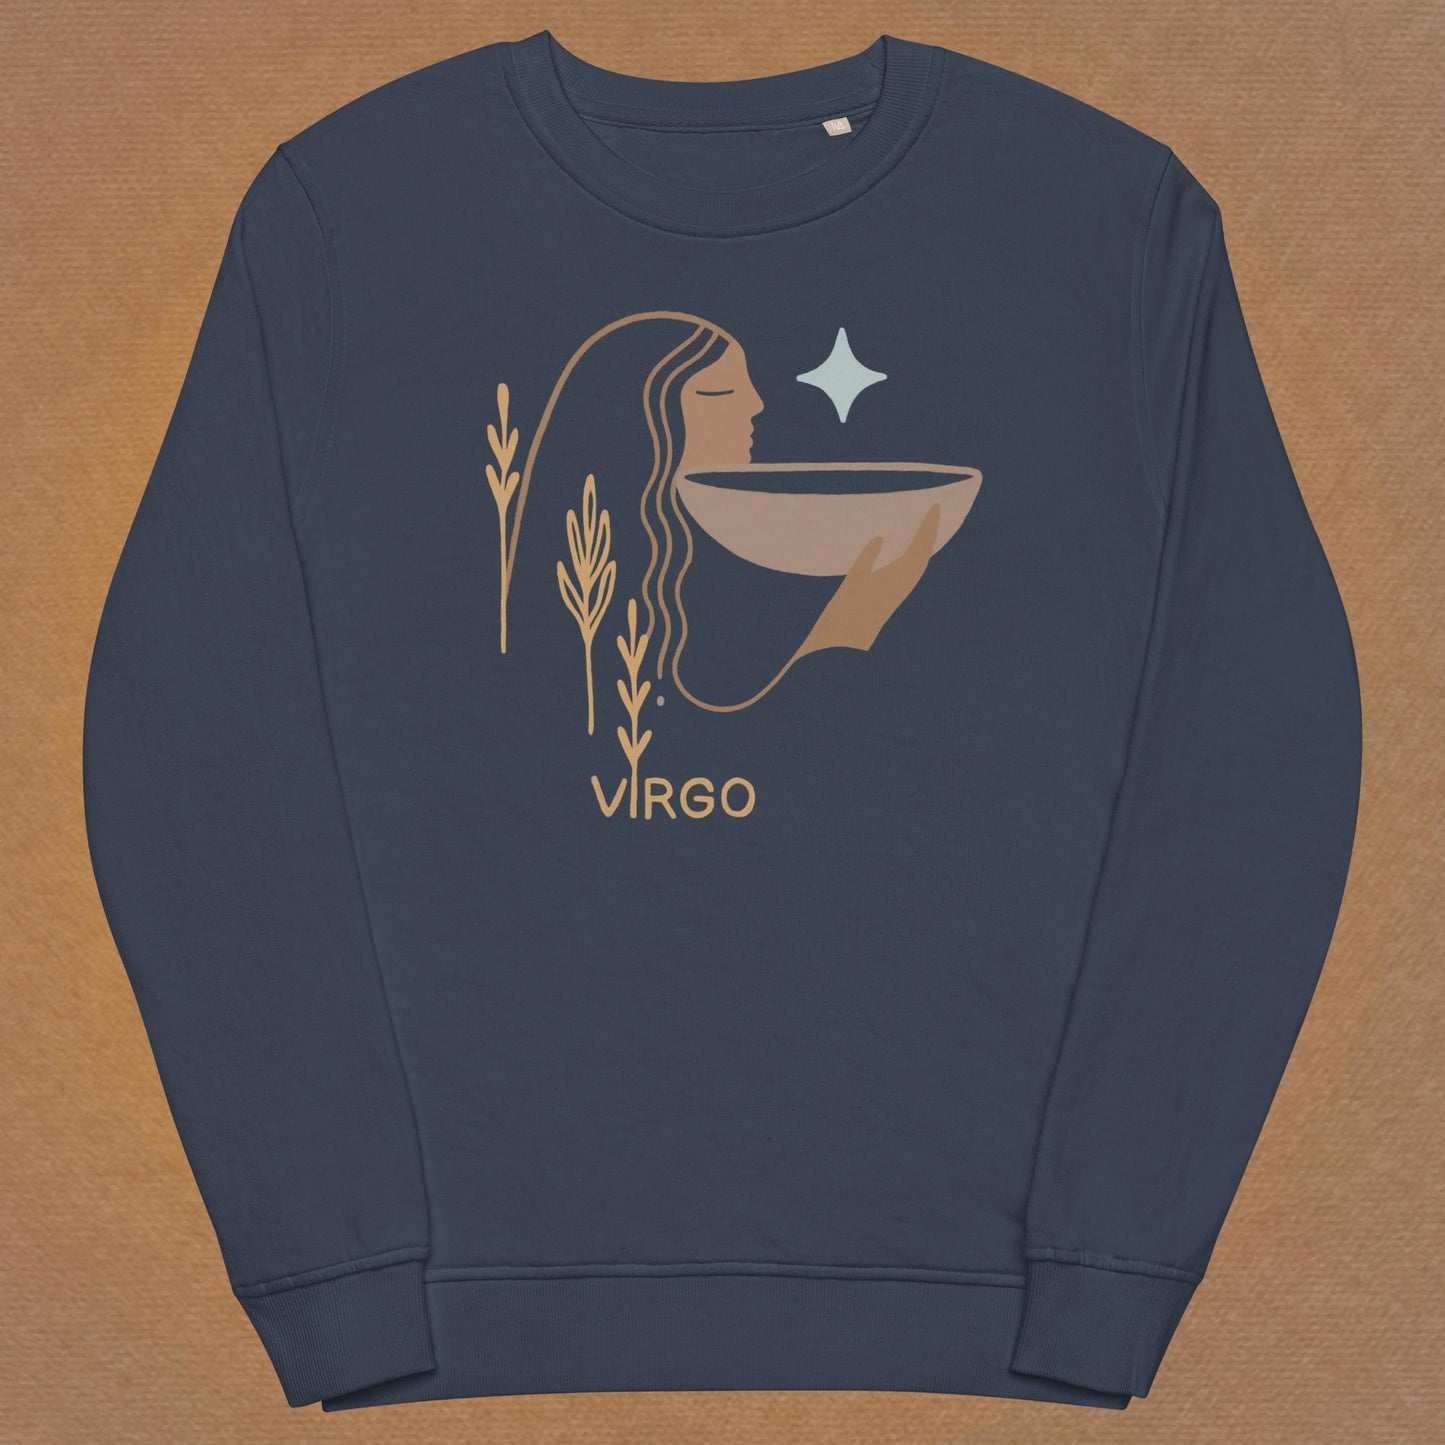 Virgo - Unisex organic sweatshirt